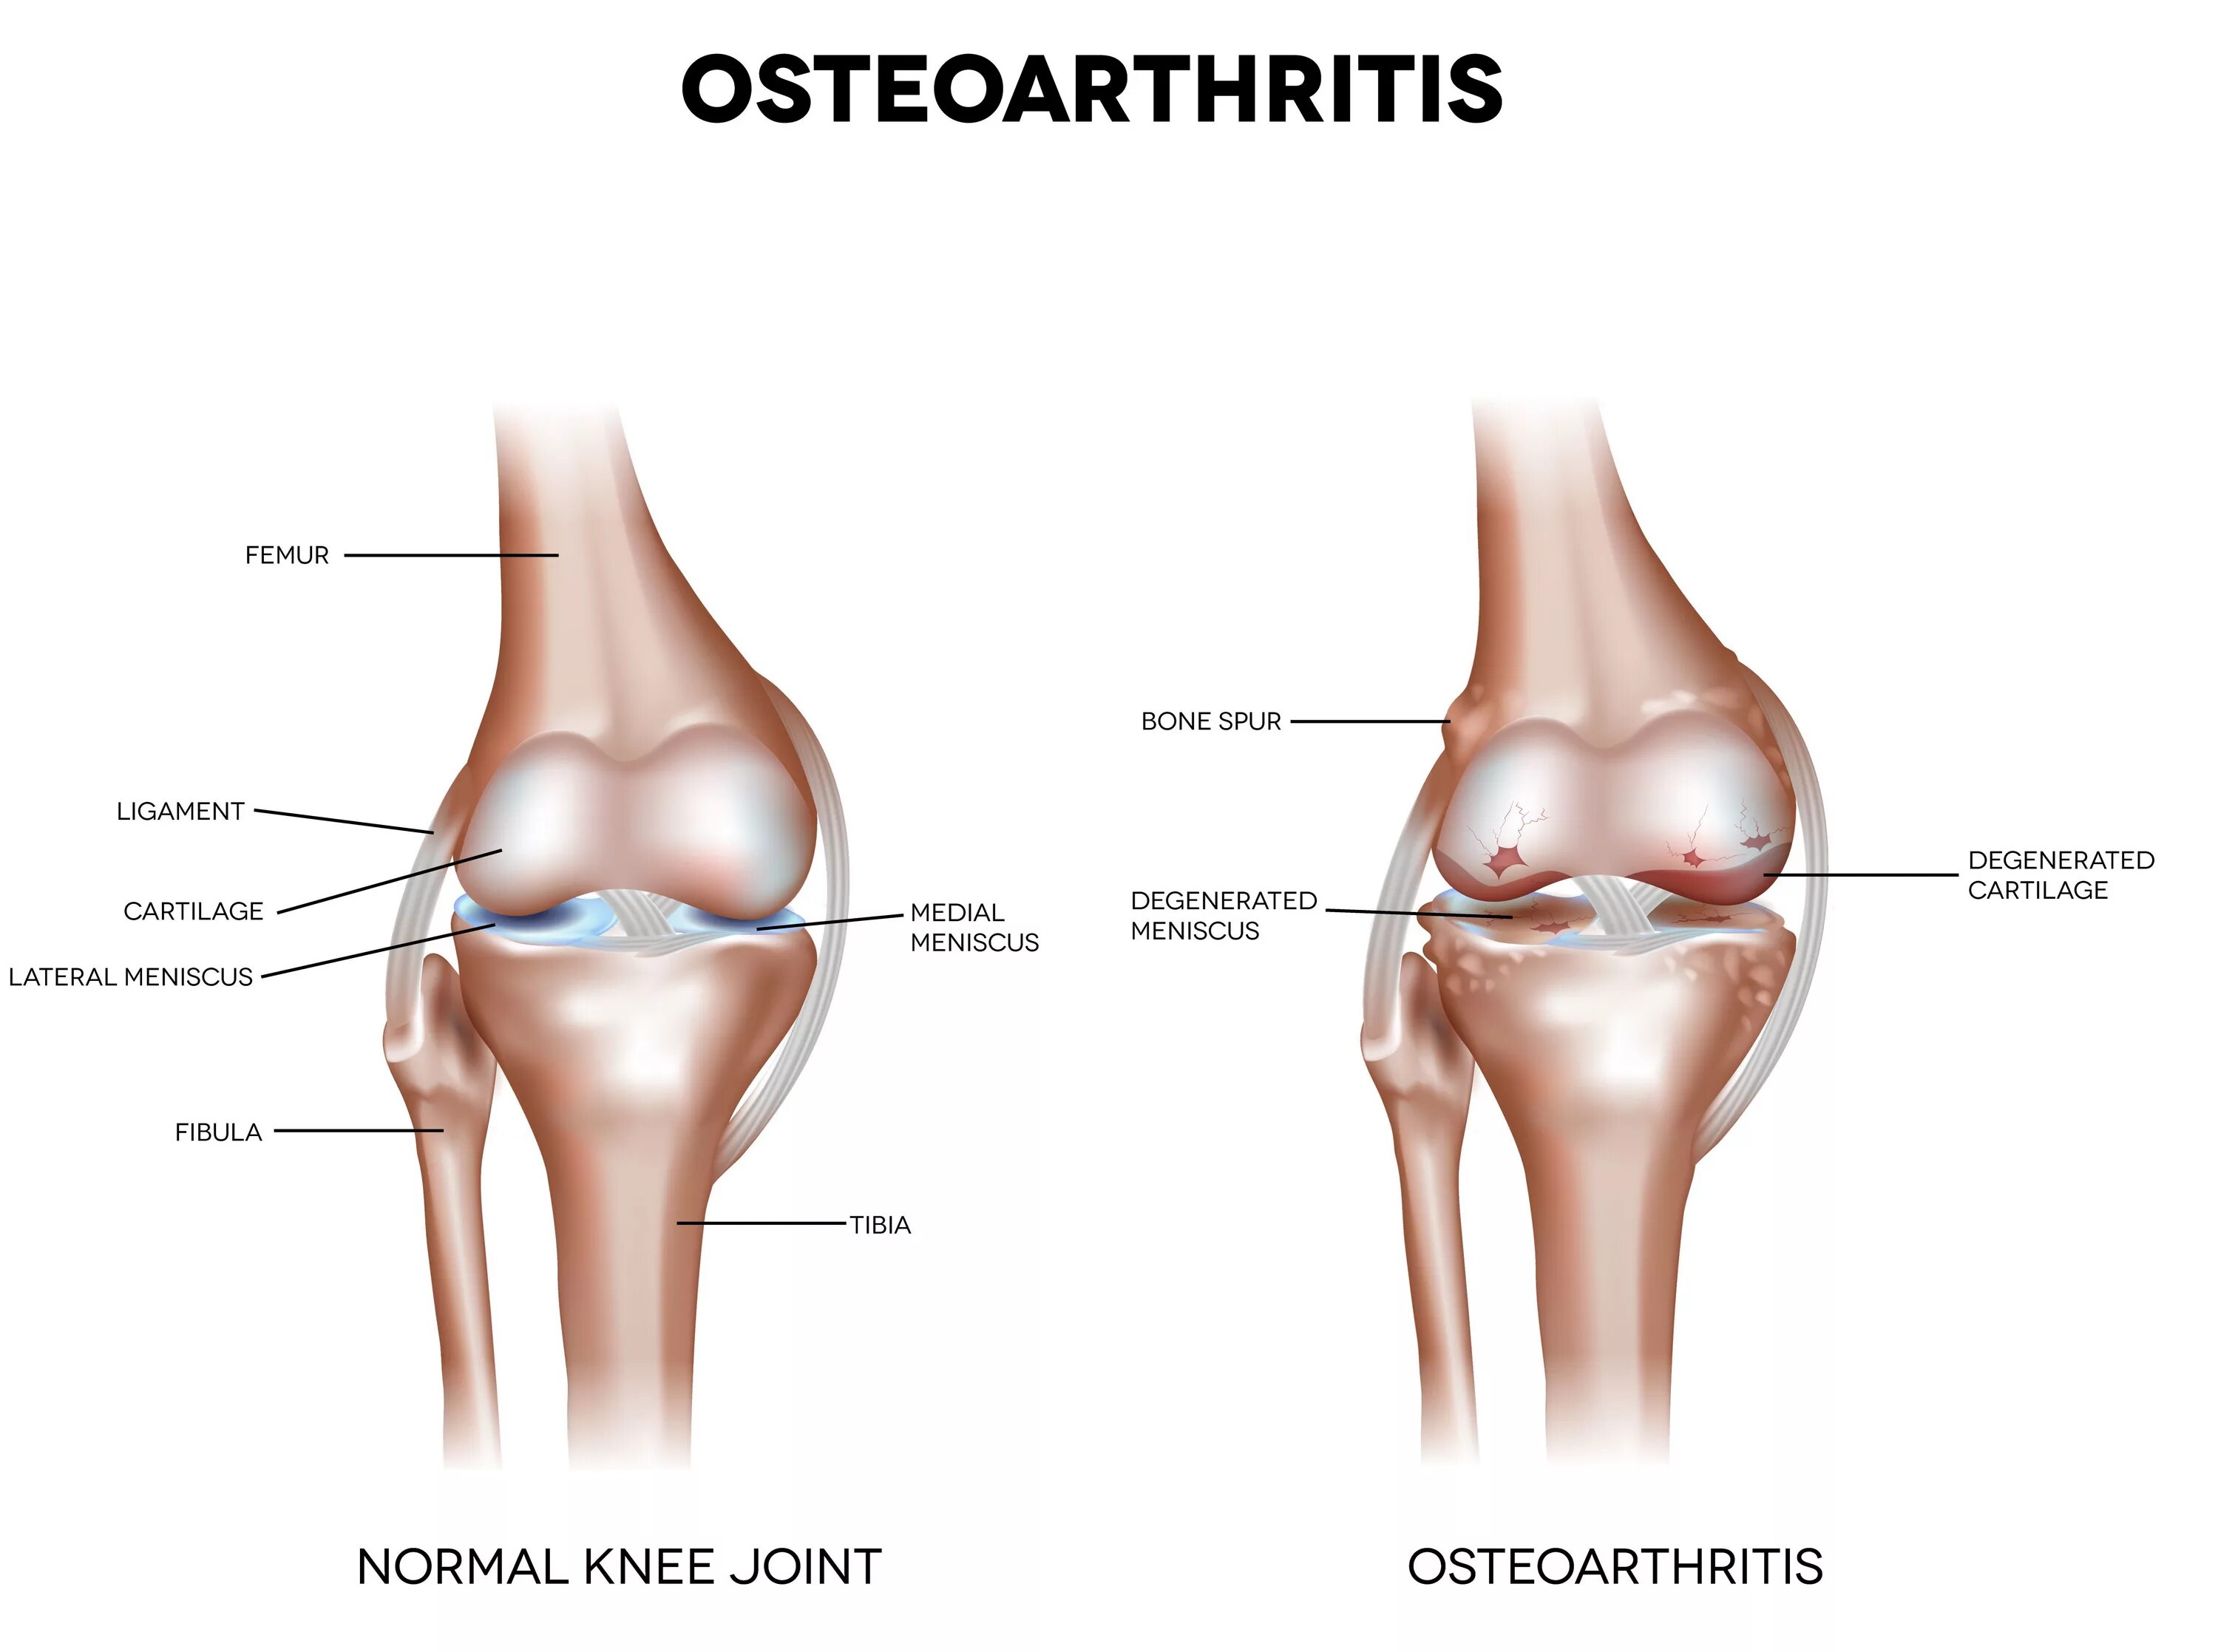 Артроз коленного сустава название. Остеоартрит коленного сустава. Остеоартрит коленного сустава синдромы. Коленный сустав анатомия артроз. Разрушение хряща коленного сустава.